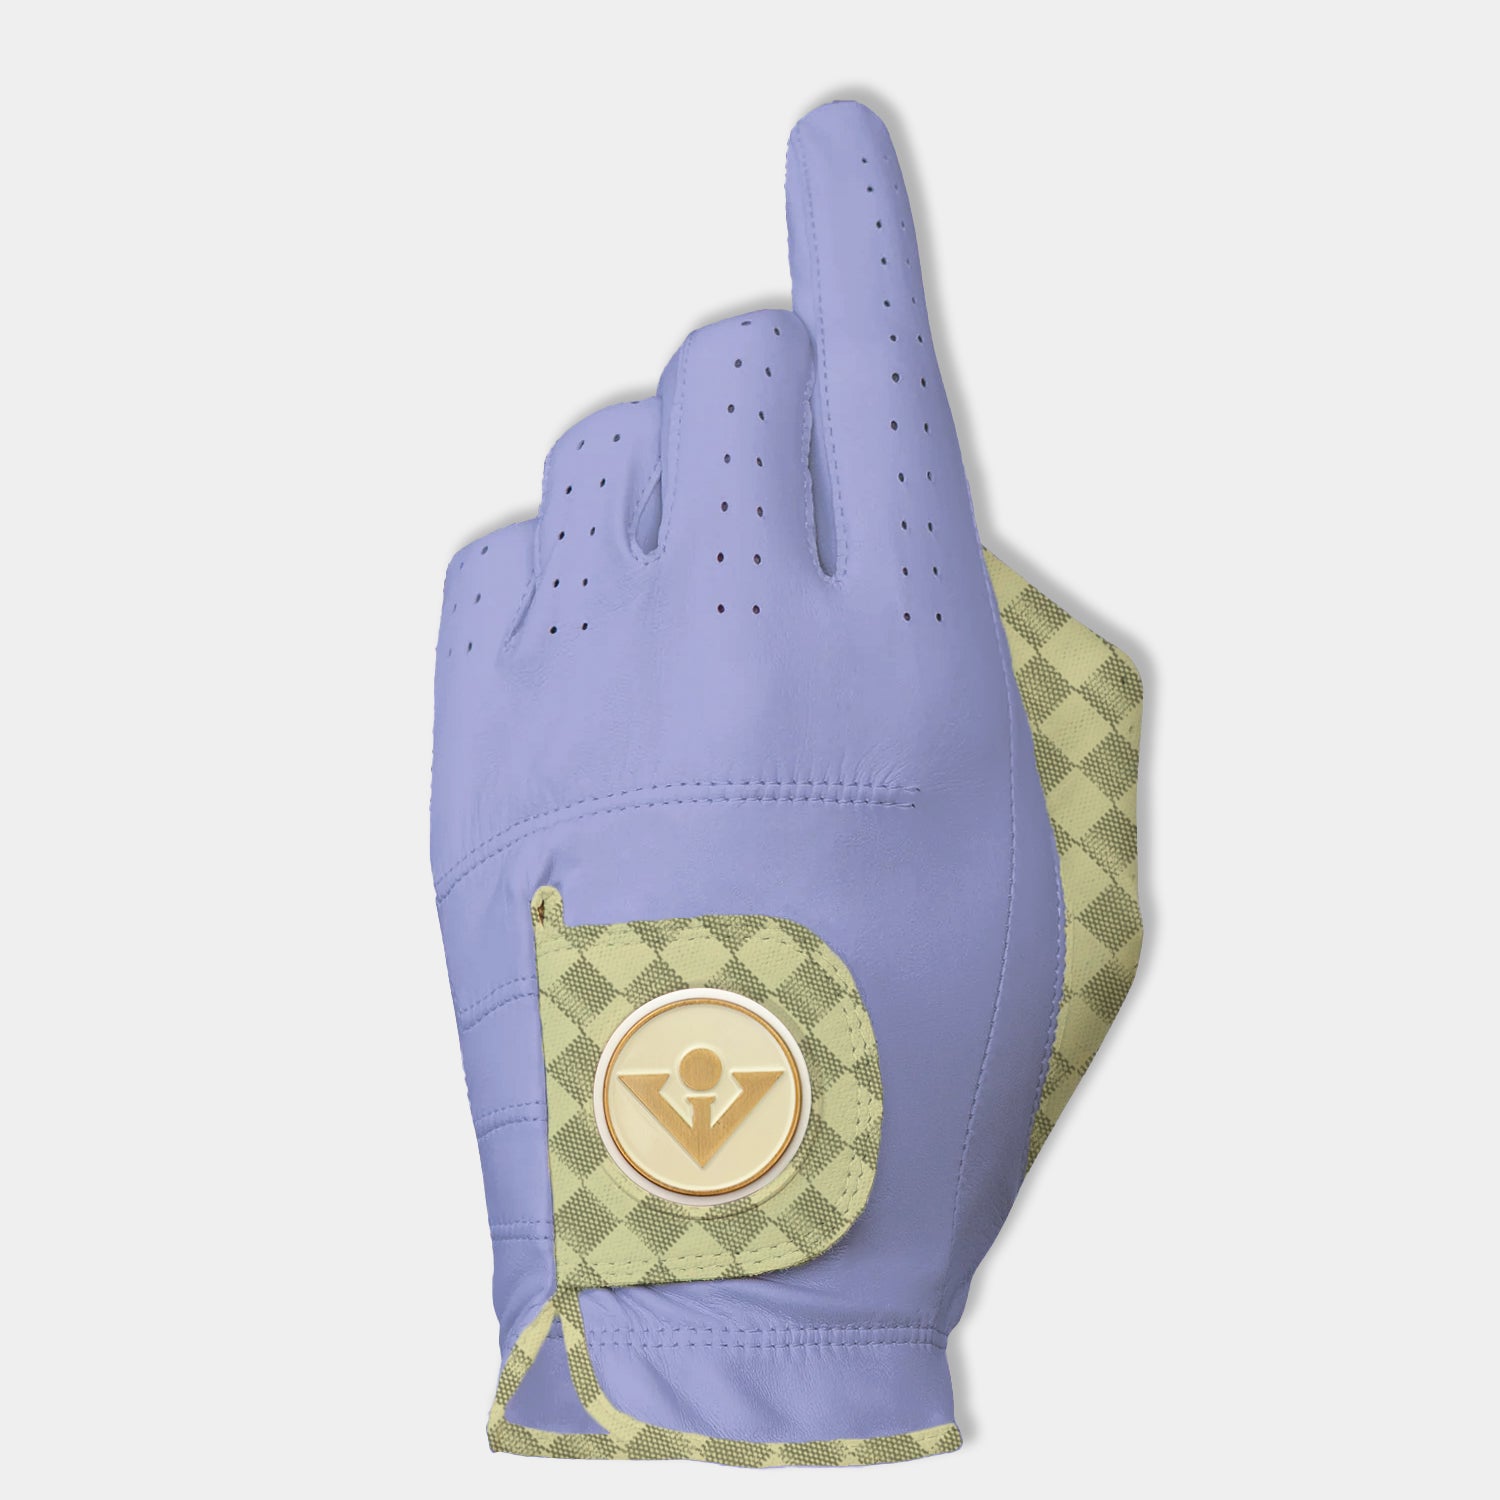 Tan checkered and lavender, men's purple golf glove, premium leather golf gloves colored